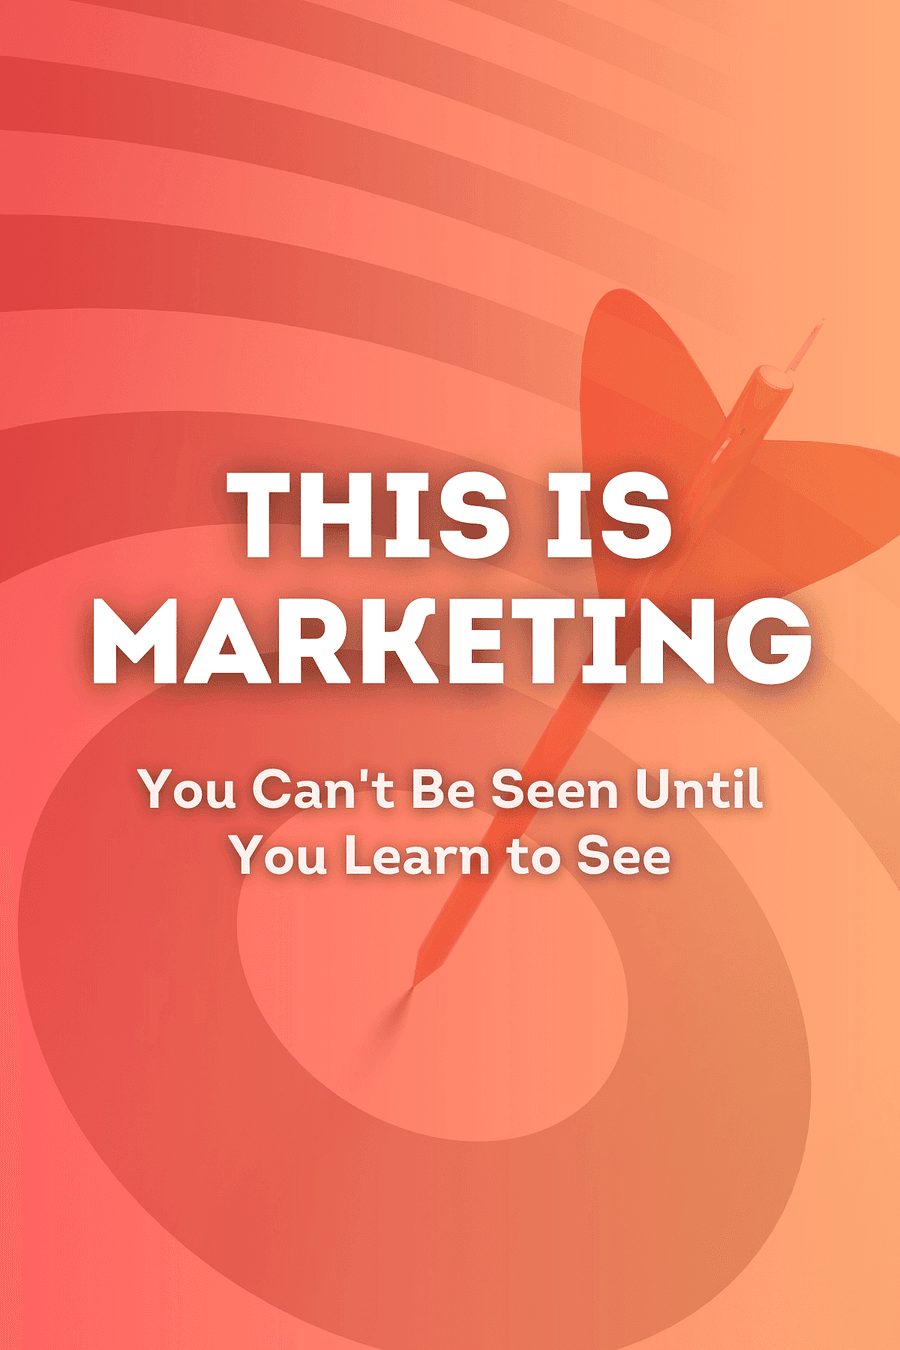 This Is Marketing by Seth Godin - Book Summary